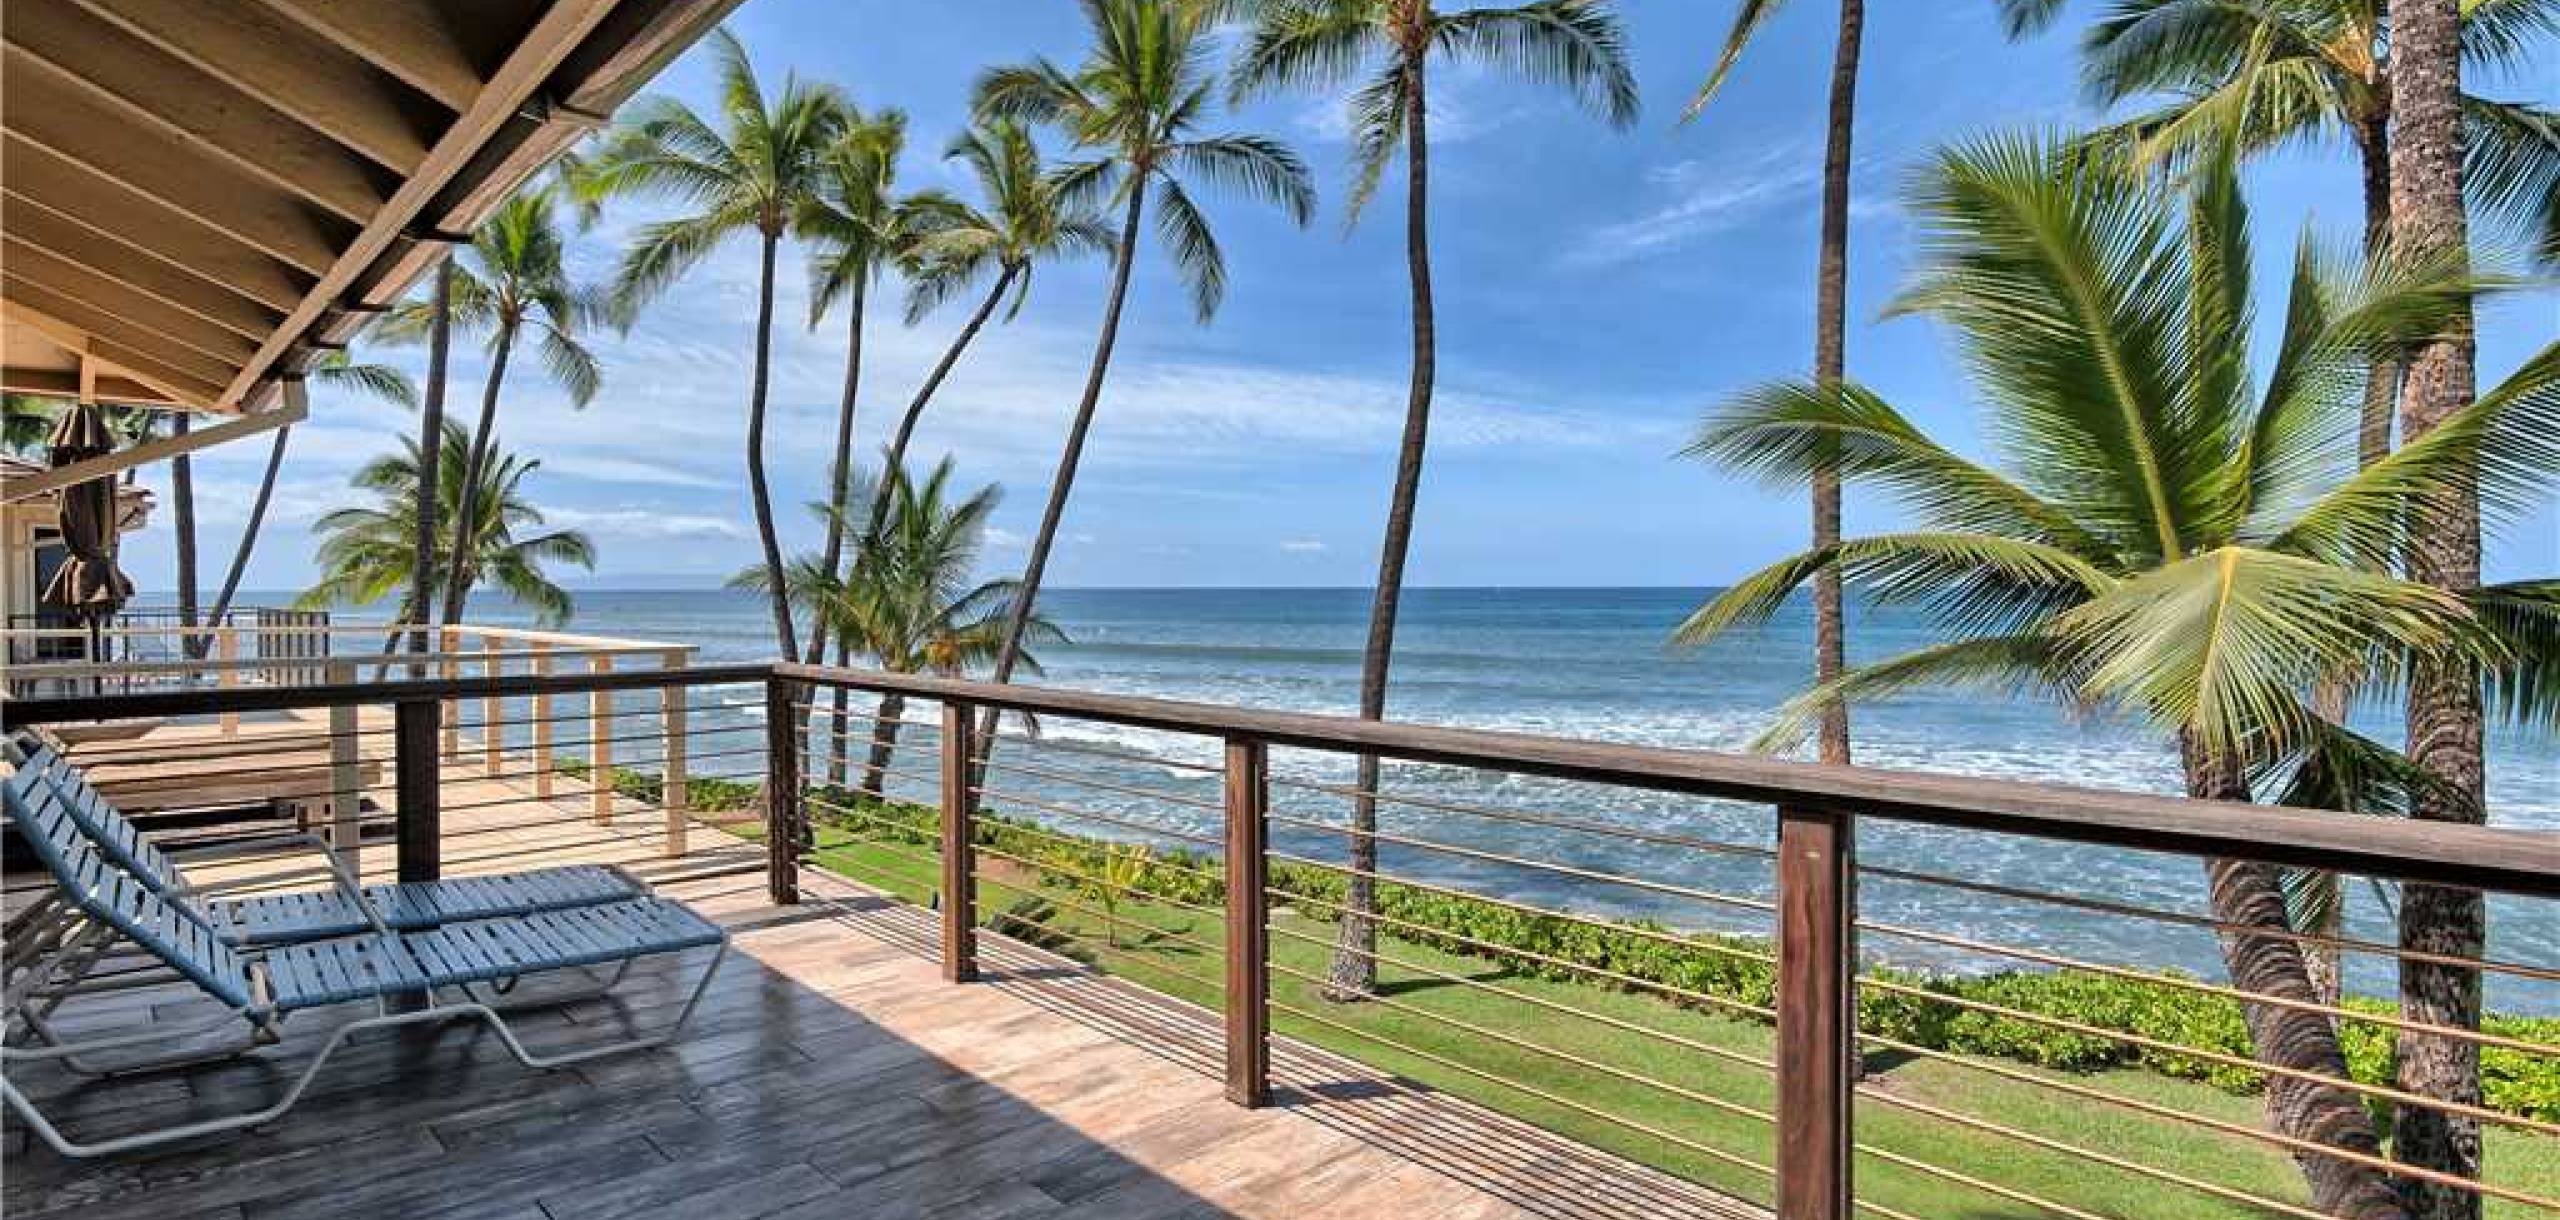 Maui, Hawaii vacation rental destinations